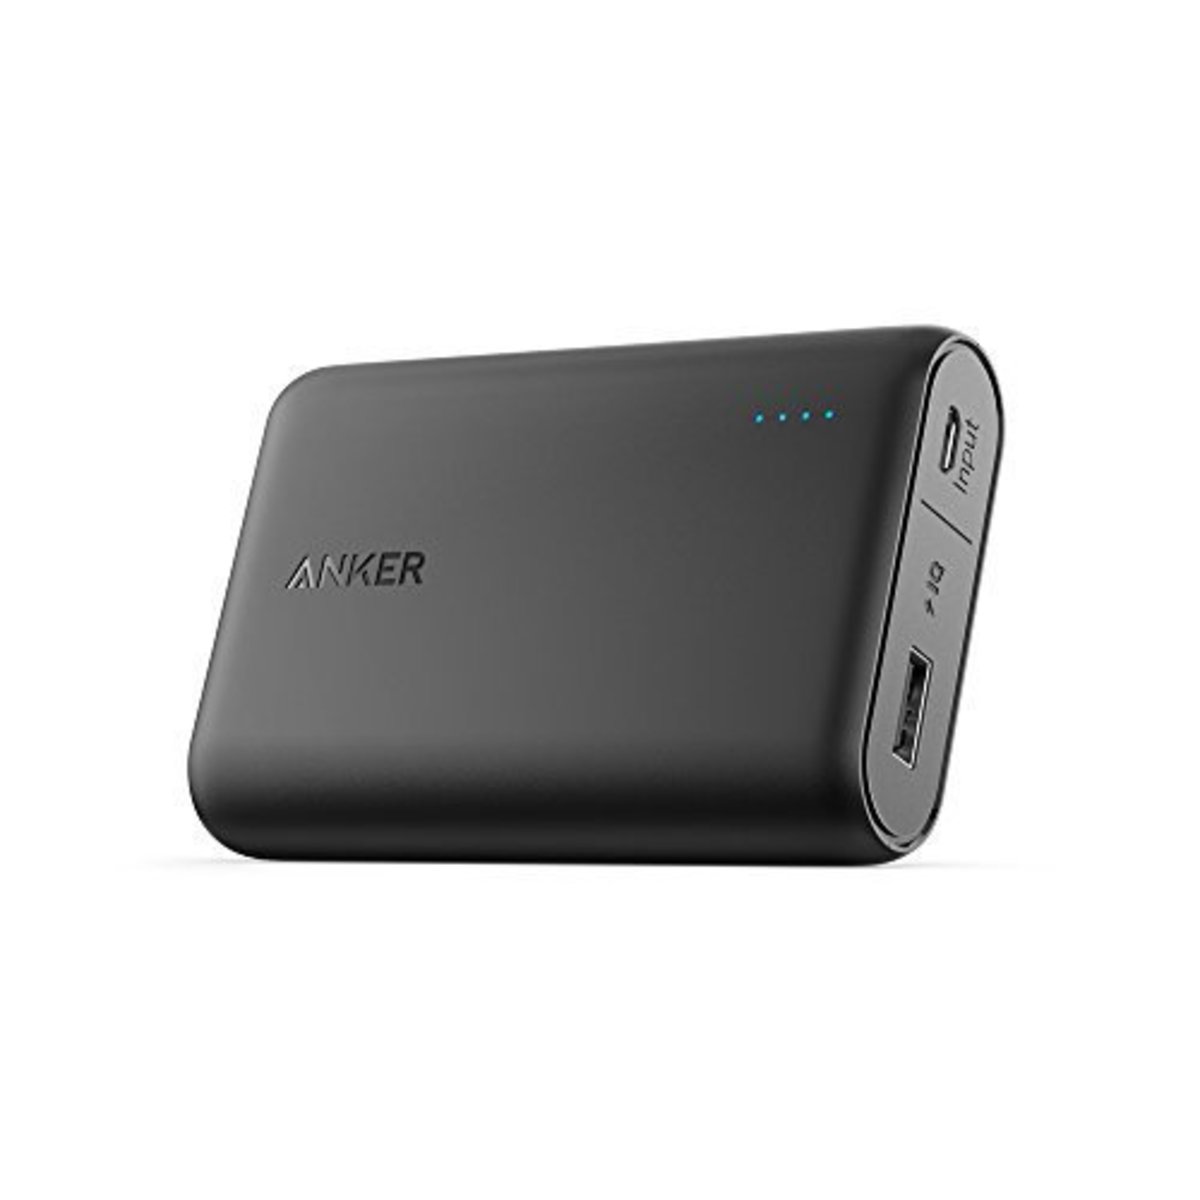 anker-portable-charger.jpg